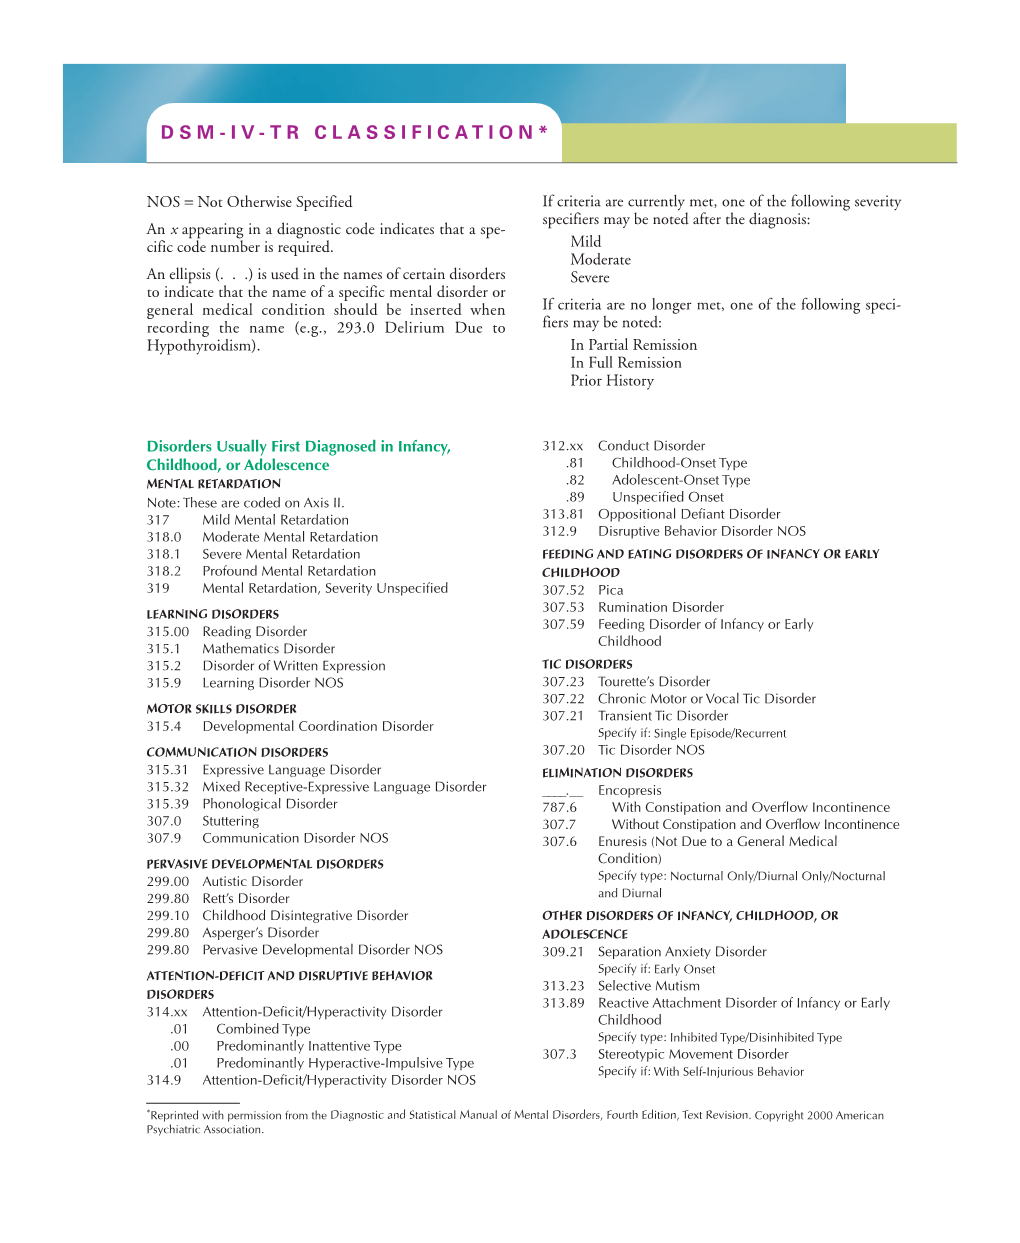 Dsm-Iv-Tr Classification*